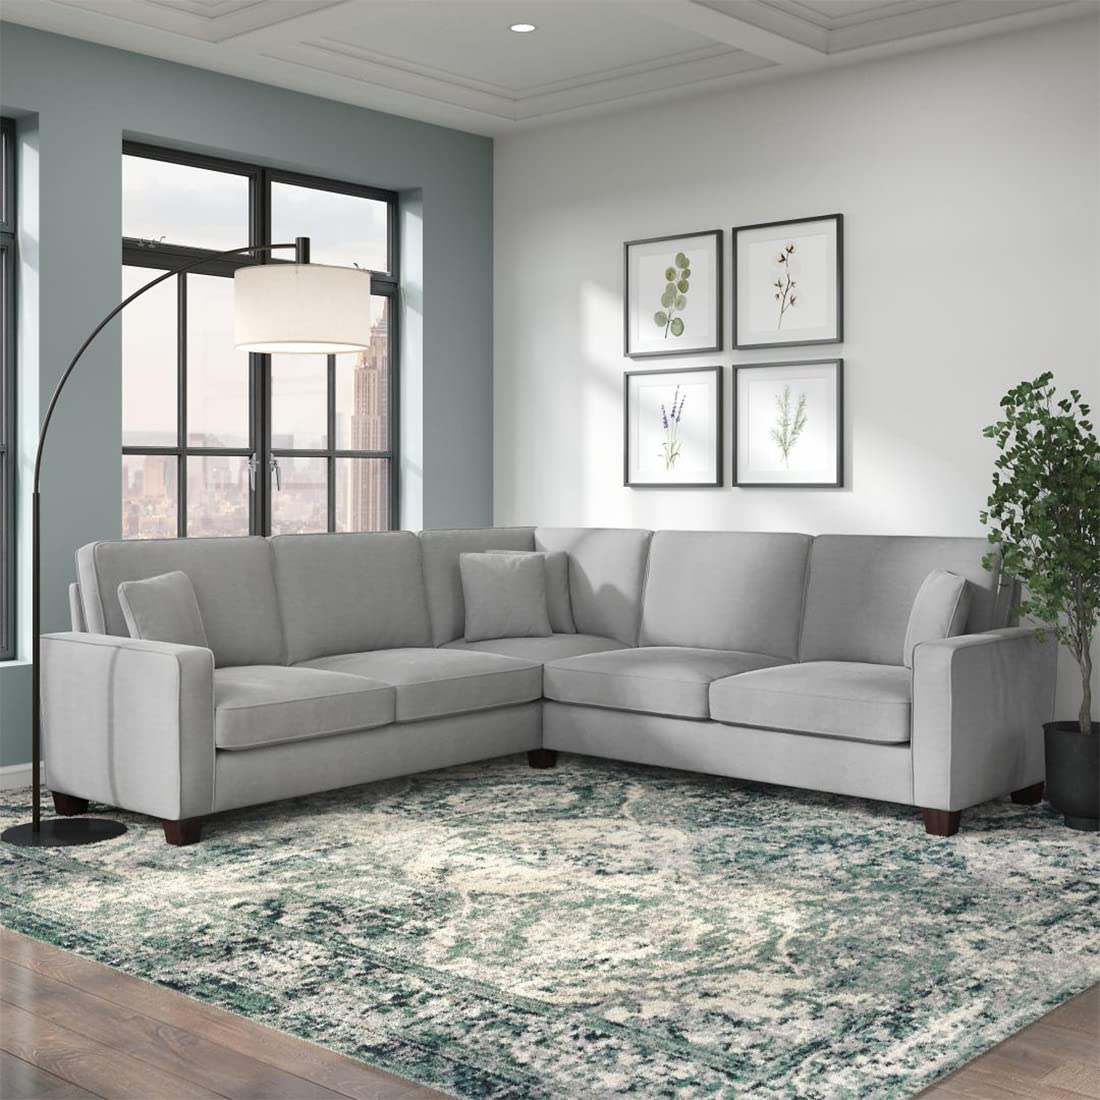 Torque India Moscow 5 Seater Corner L Shape Fabric Sofa For Living Room - Torque India